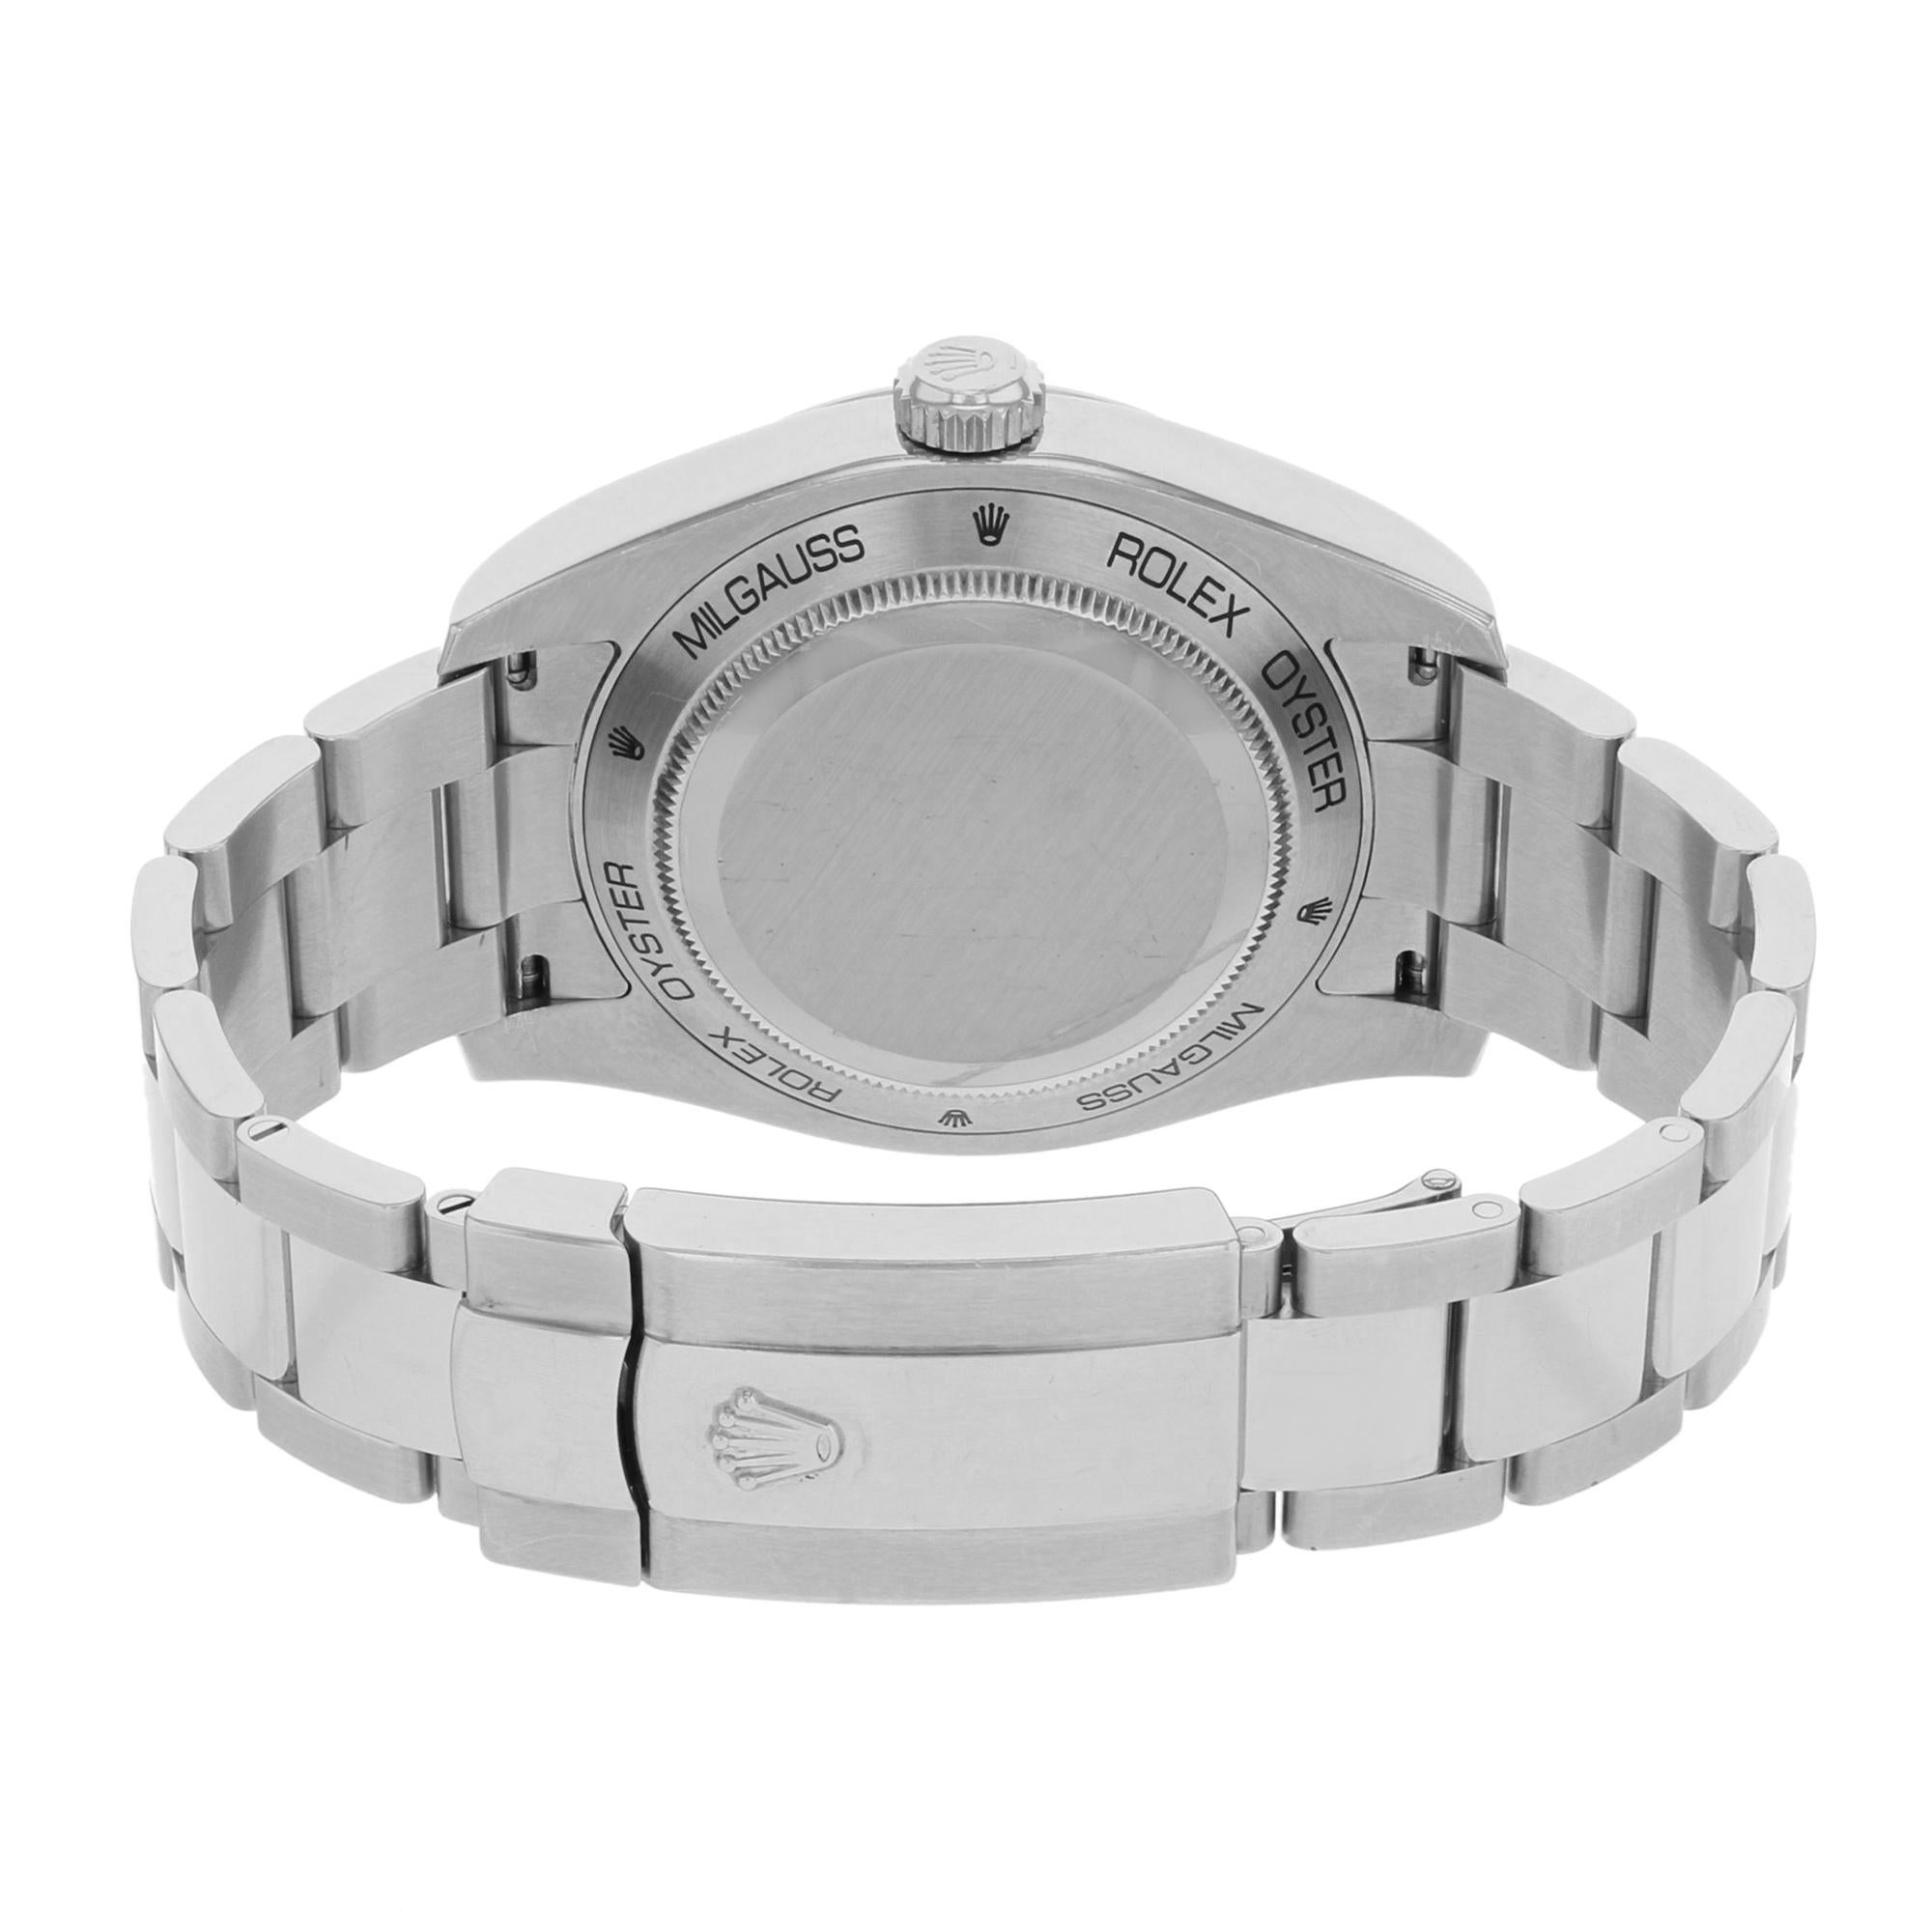 Rolex Milgauss Steel Black Dial Green Crystal Automatic Men's Watch 116400GV Bko 2